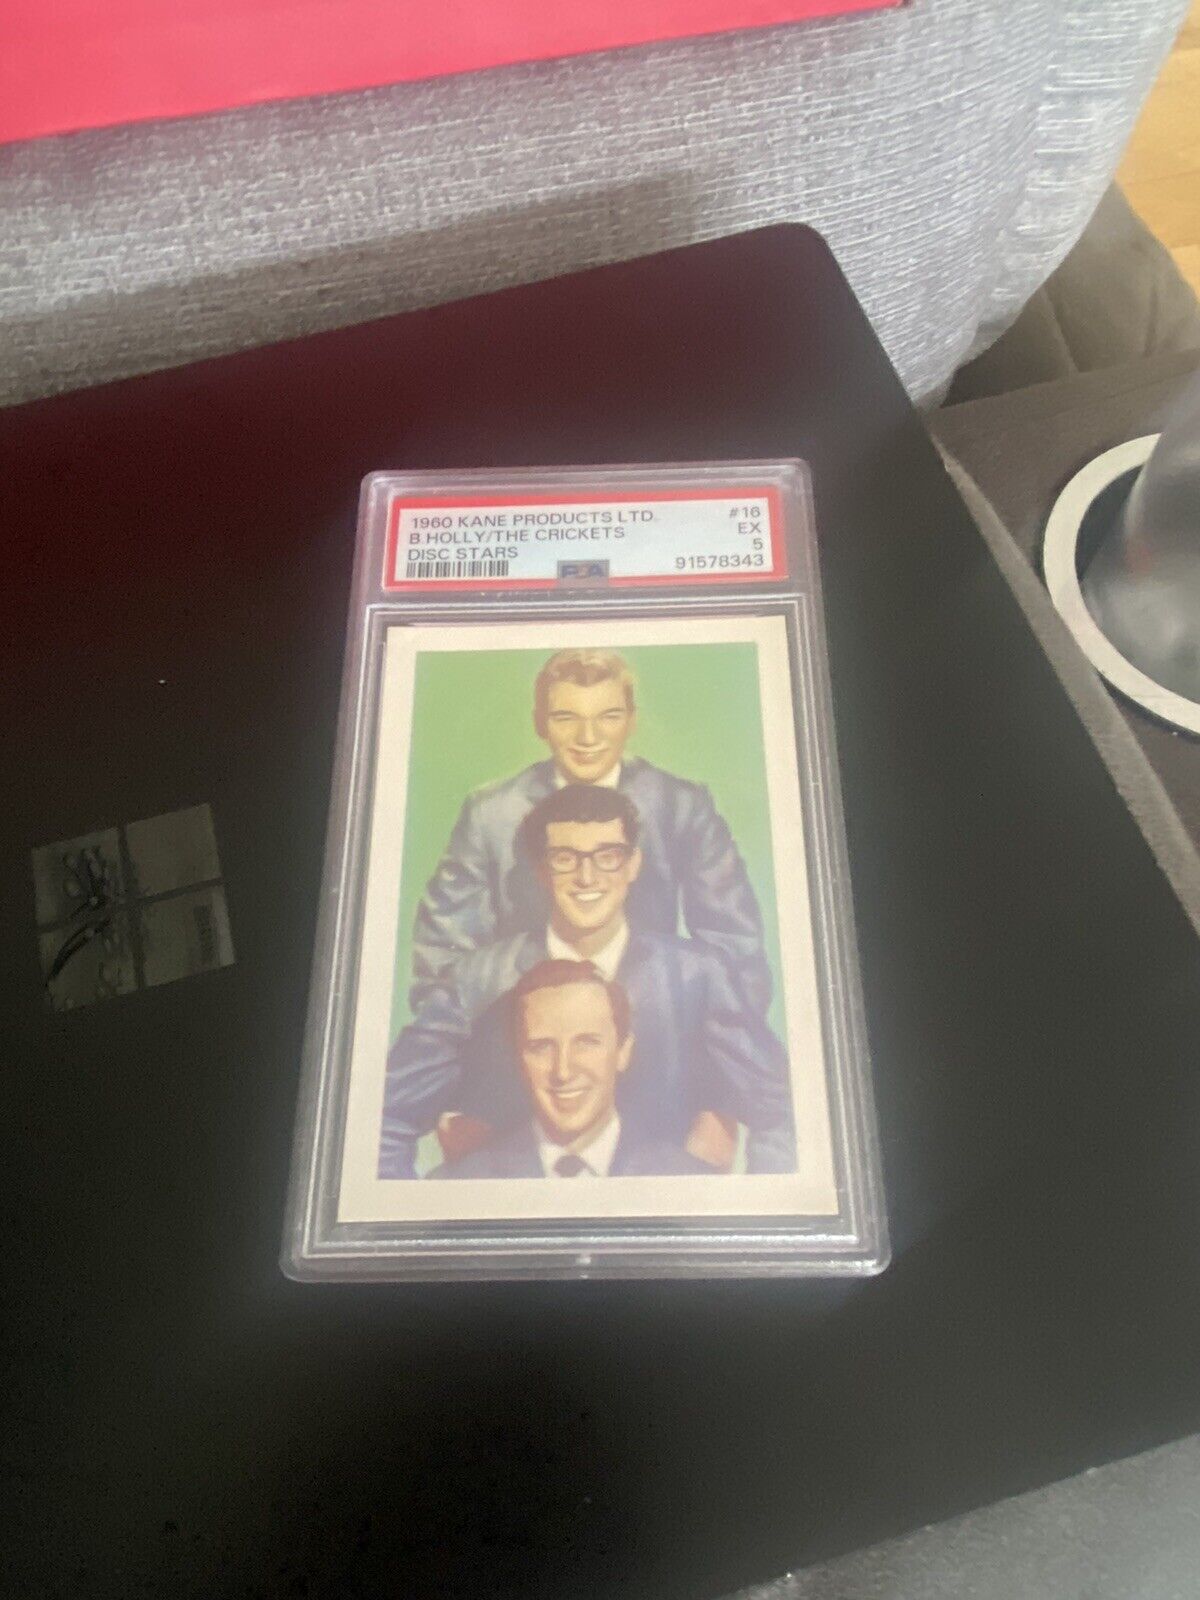 1960 Kane Products Ltd. Disc Stars Buddy Holly/The Crickets #16 PSA 5 CENTERED